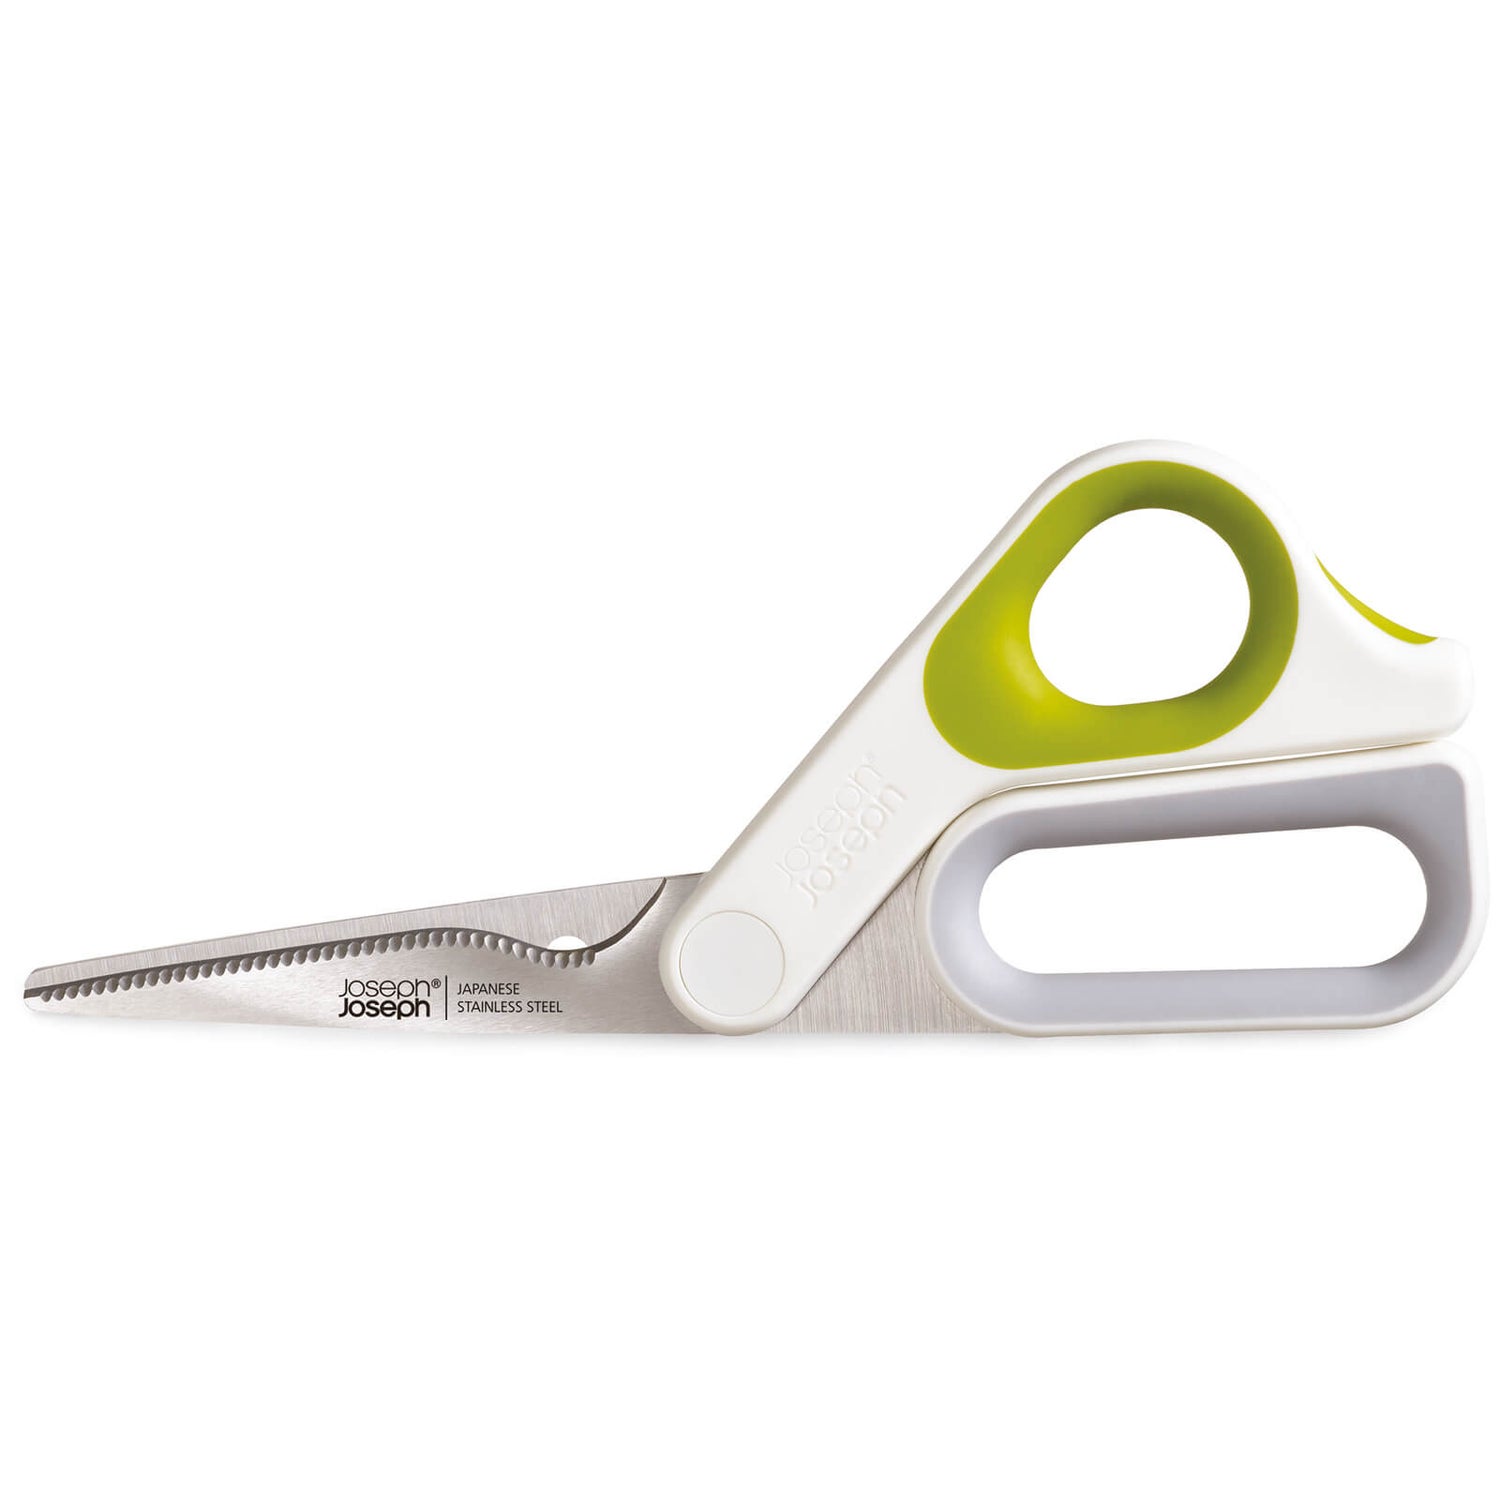 Joseph Joseph PowerGrip All-Purpose Kitchen Scissors